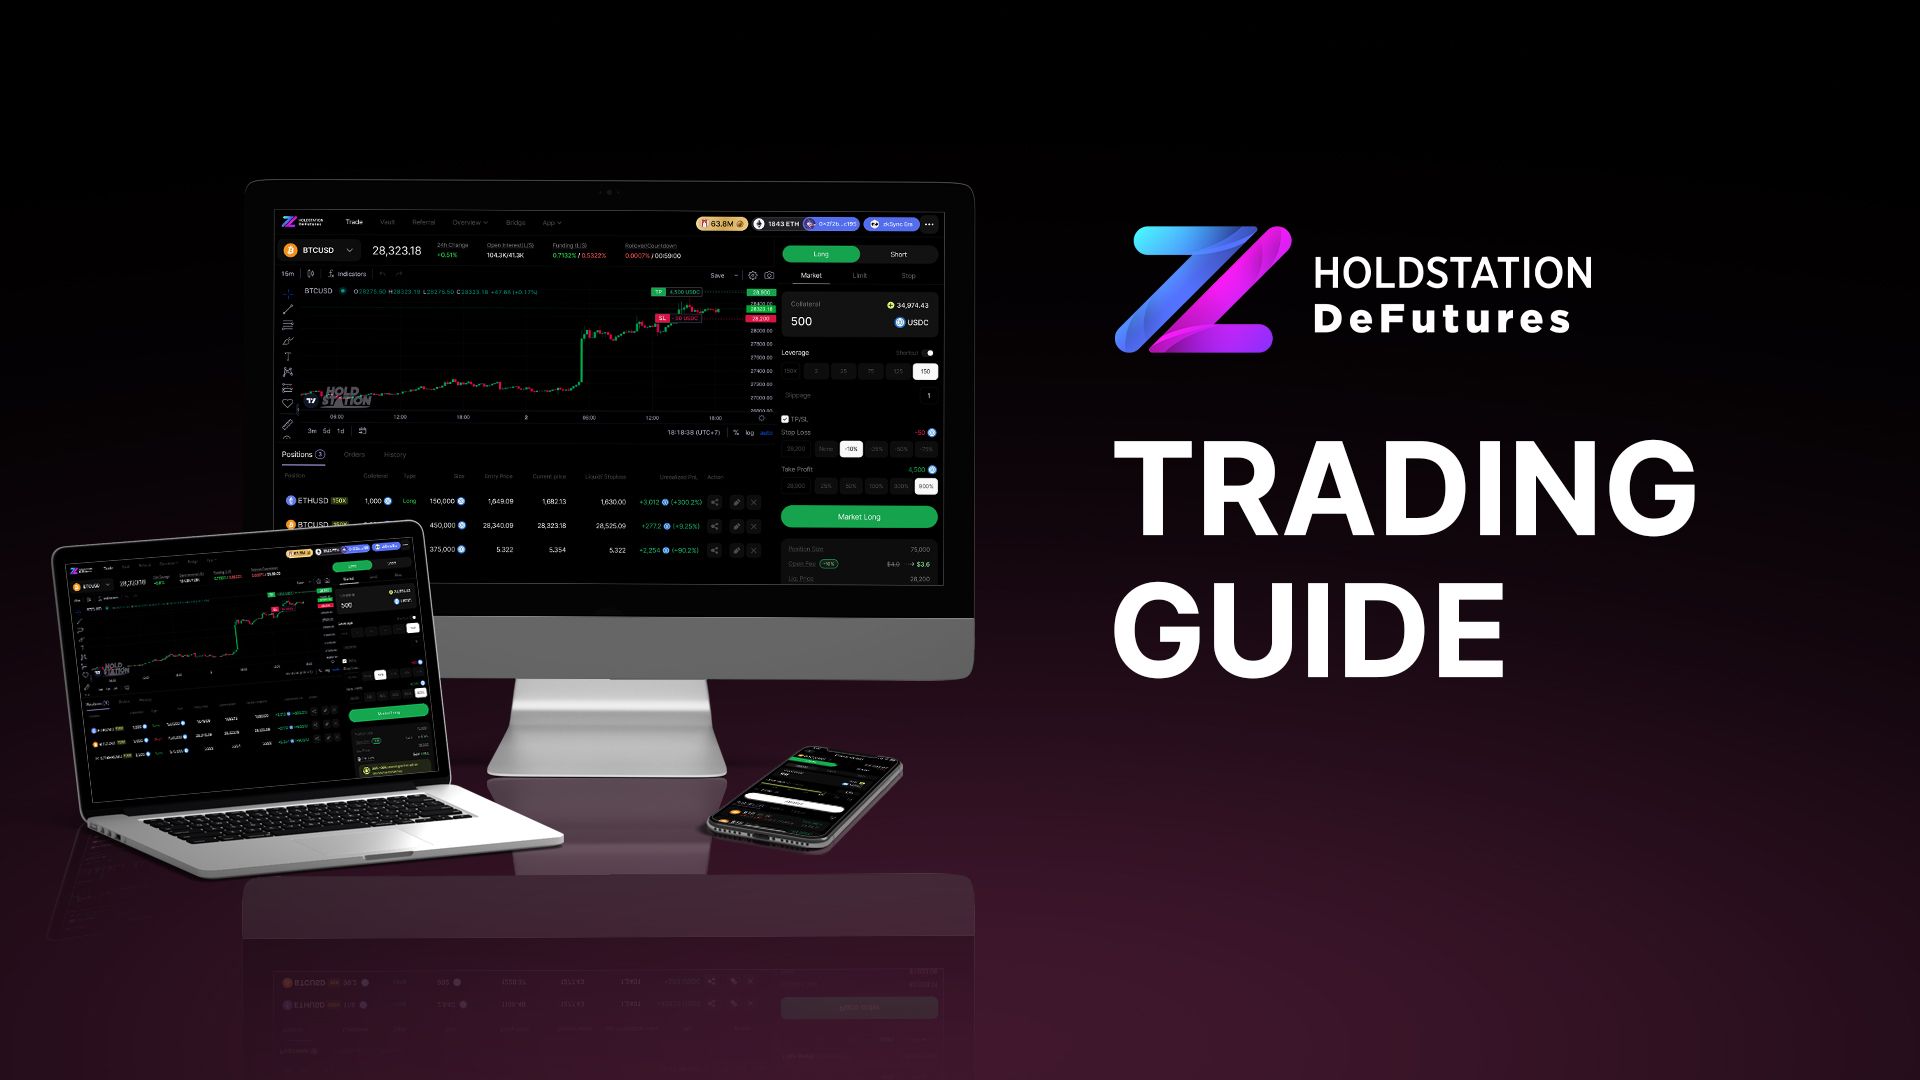 Holdstation Defutures: Trading Guide